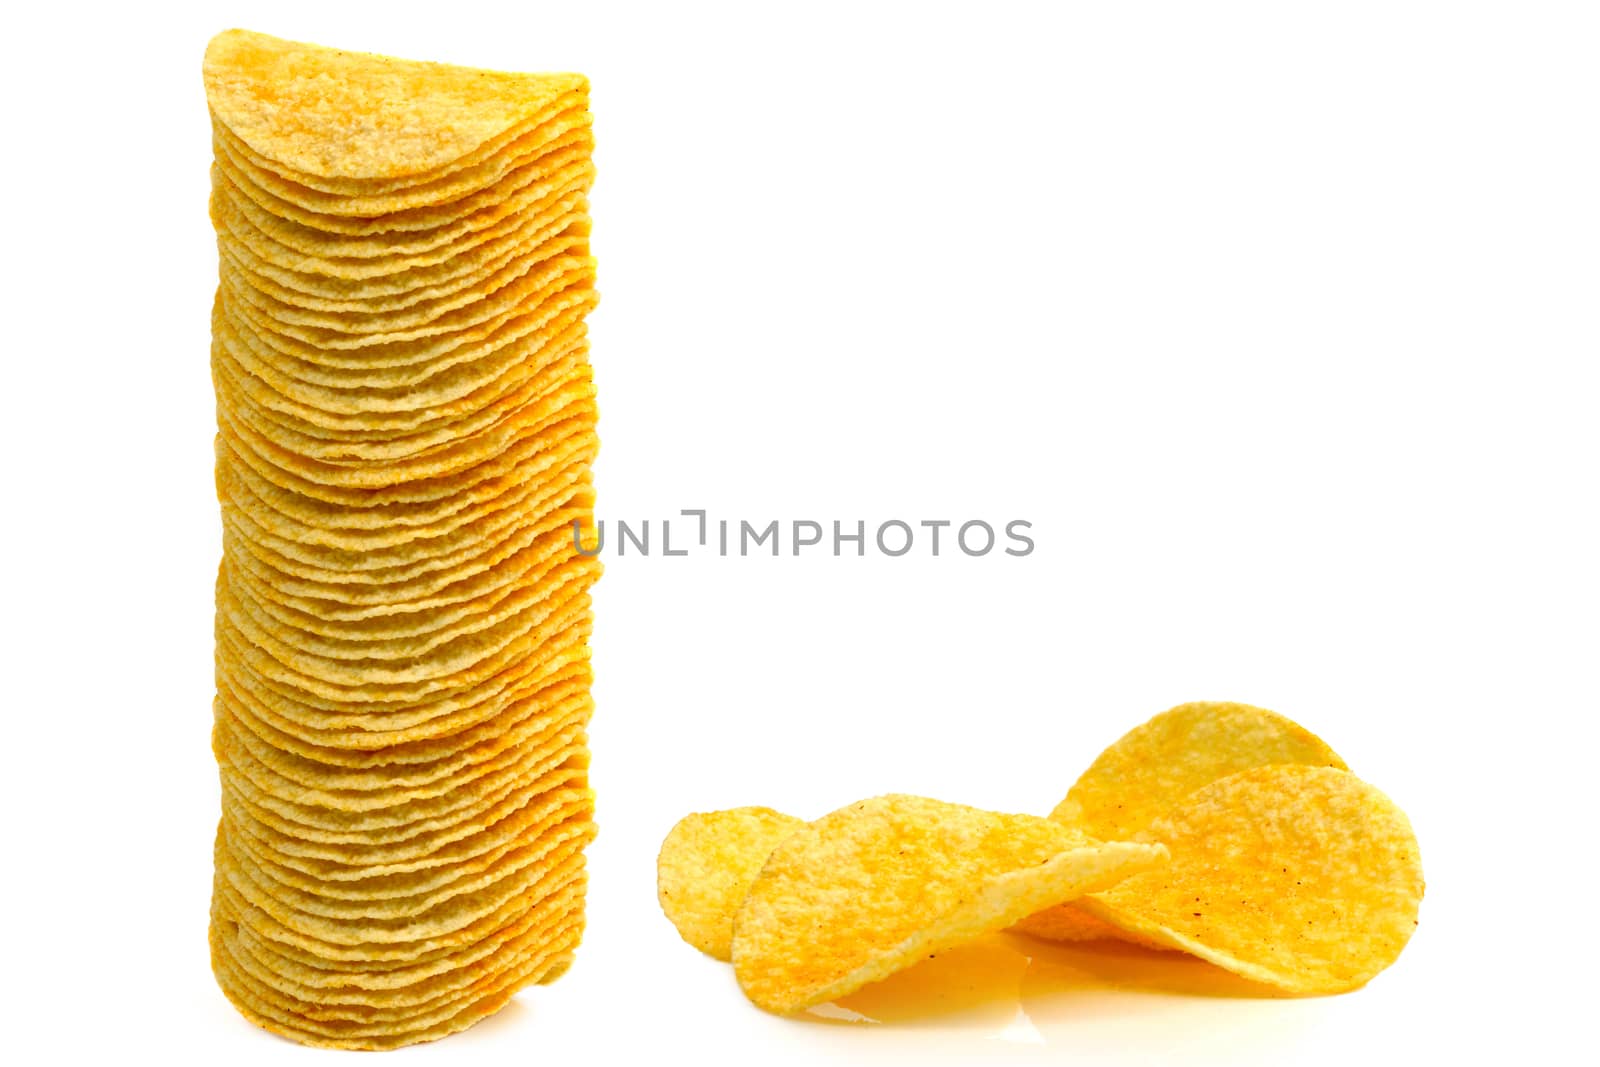 Potato Chips on a white background